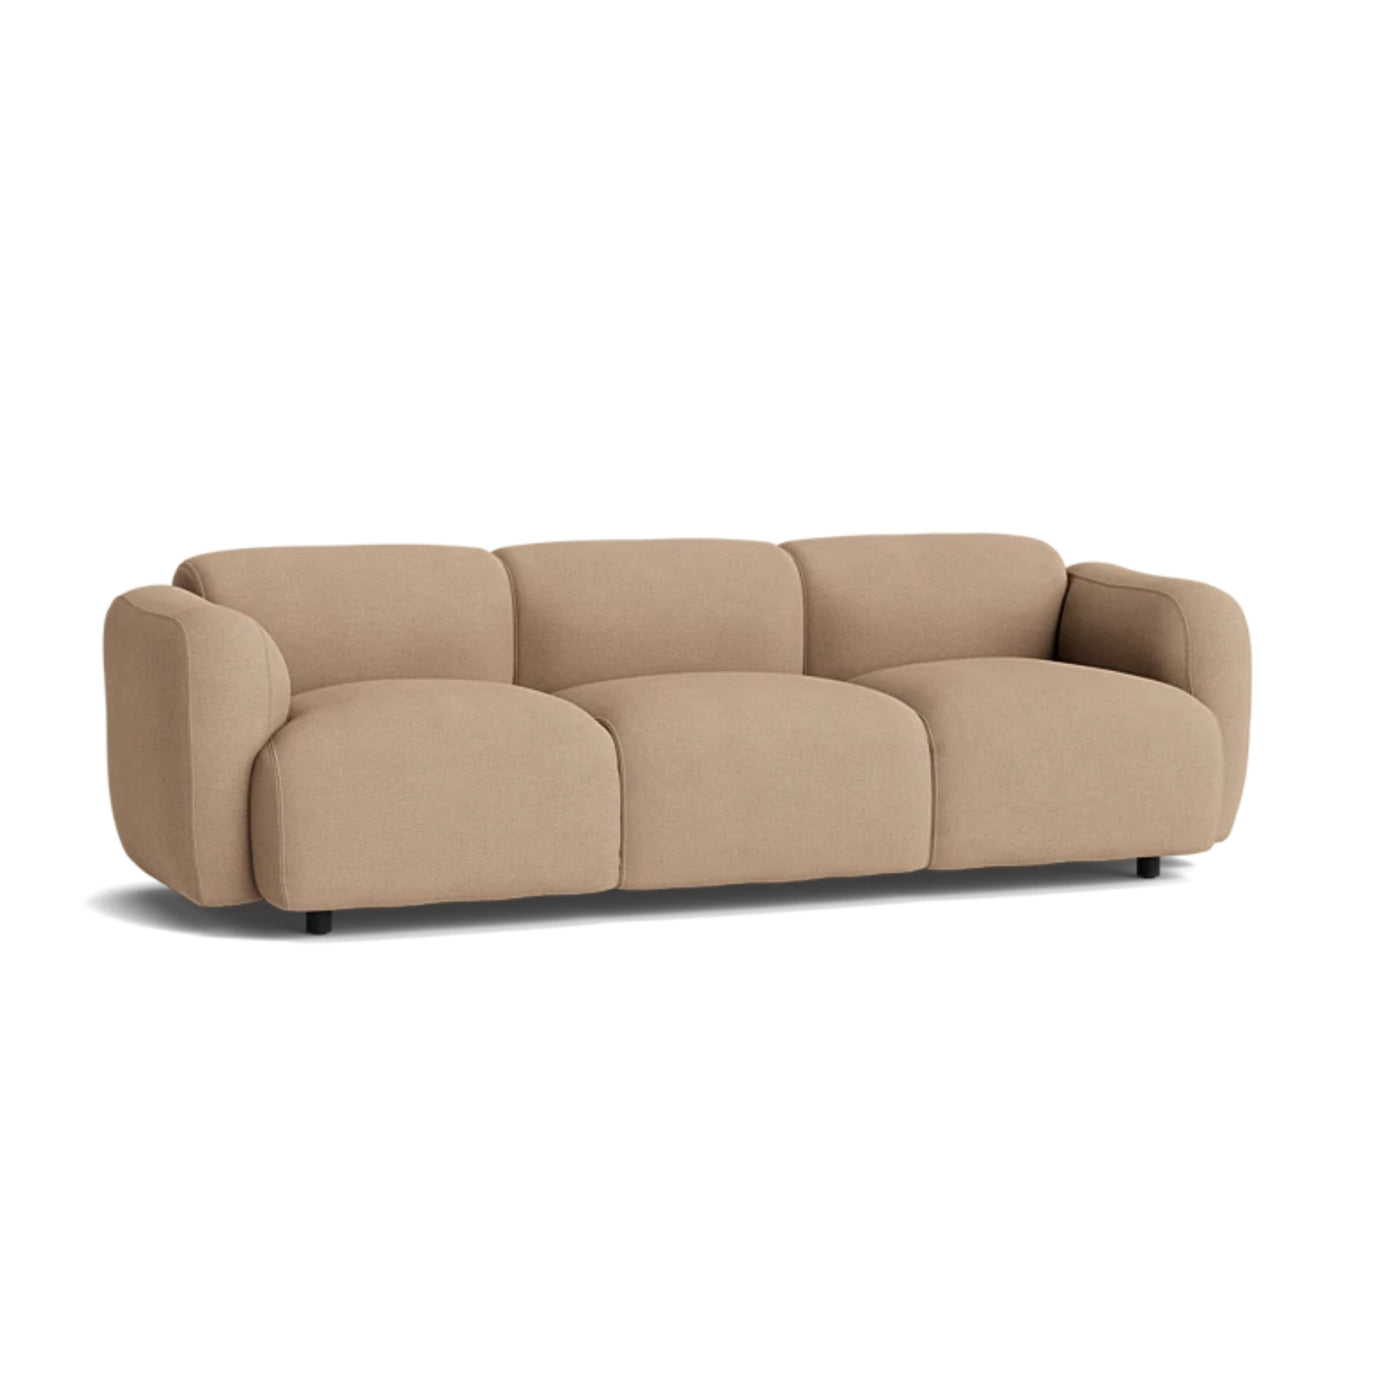 Normann Copenhagen Swell 3 Seater Sofa at someday designs. #colour_hallingdal-224